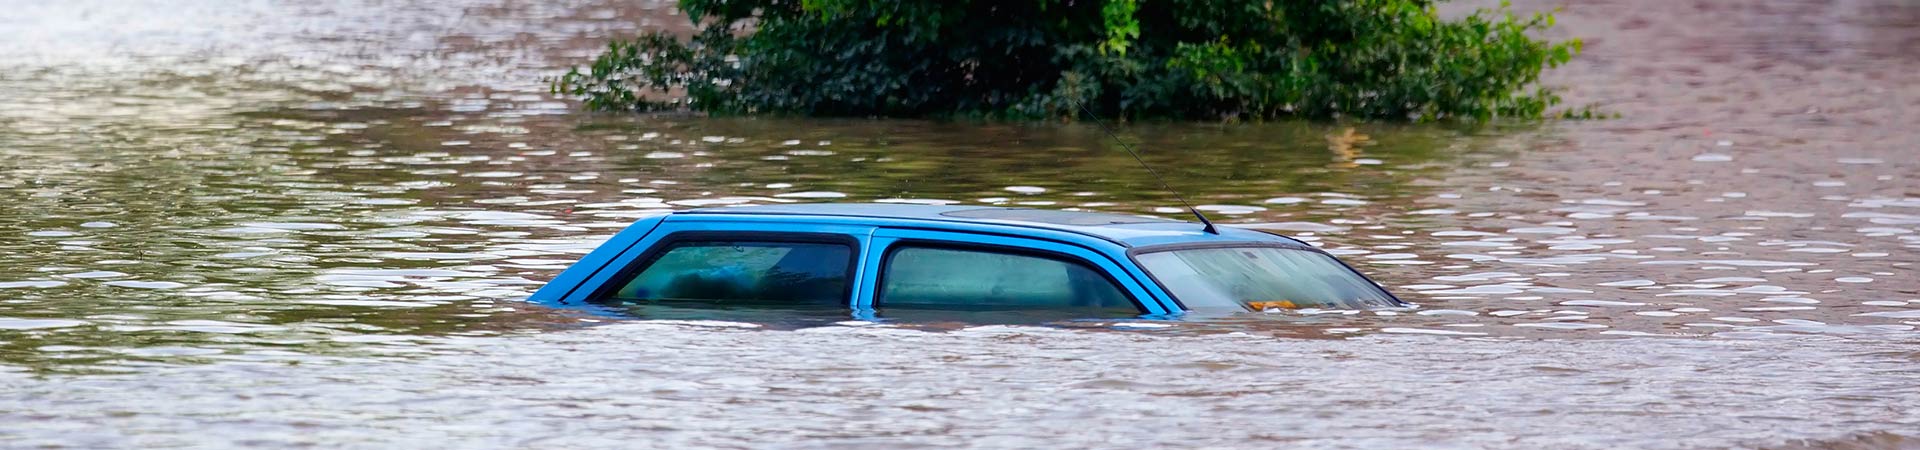 Flood Insurance in Missouri City, League City, Pasadena TX